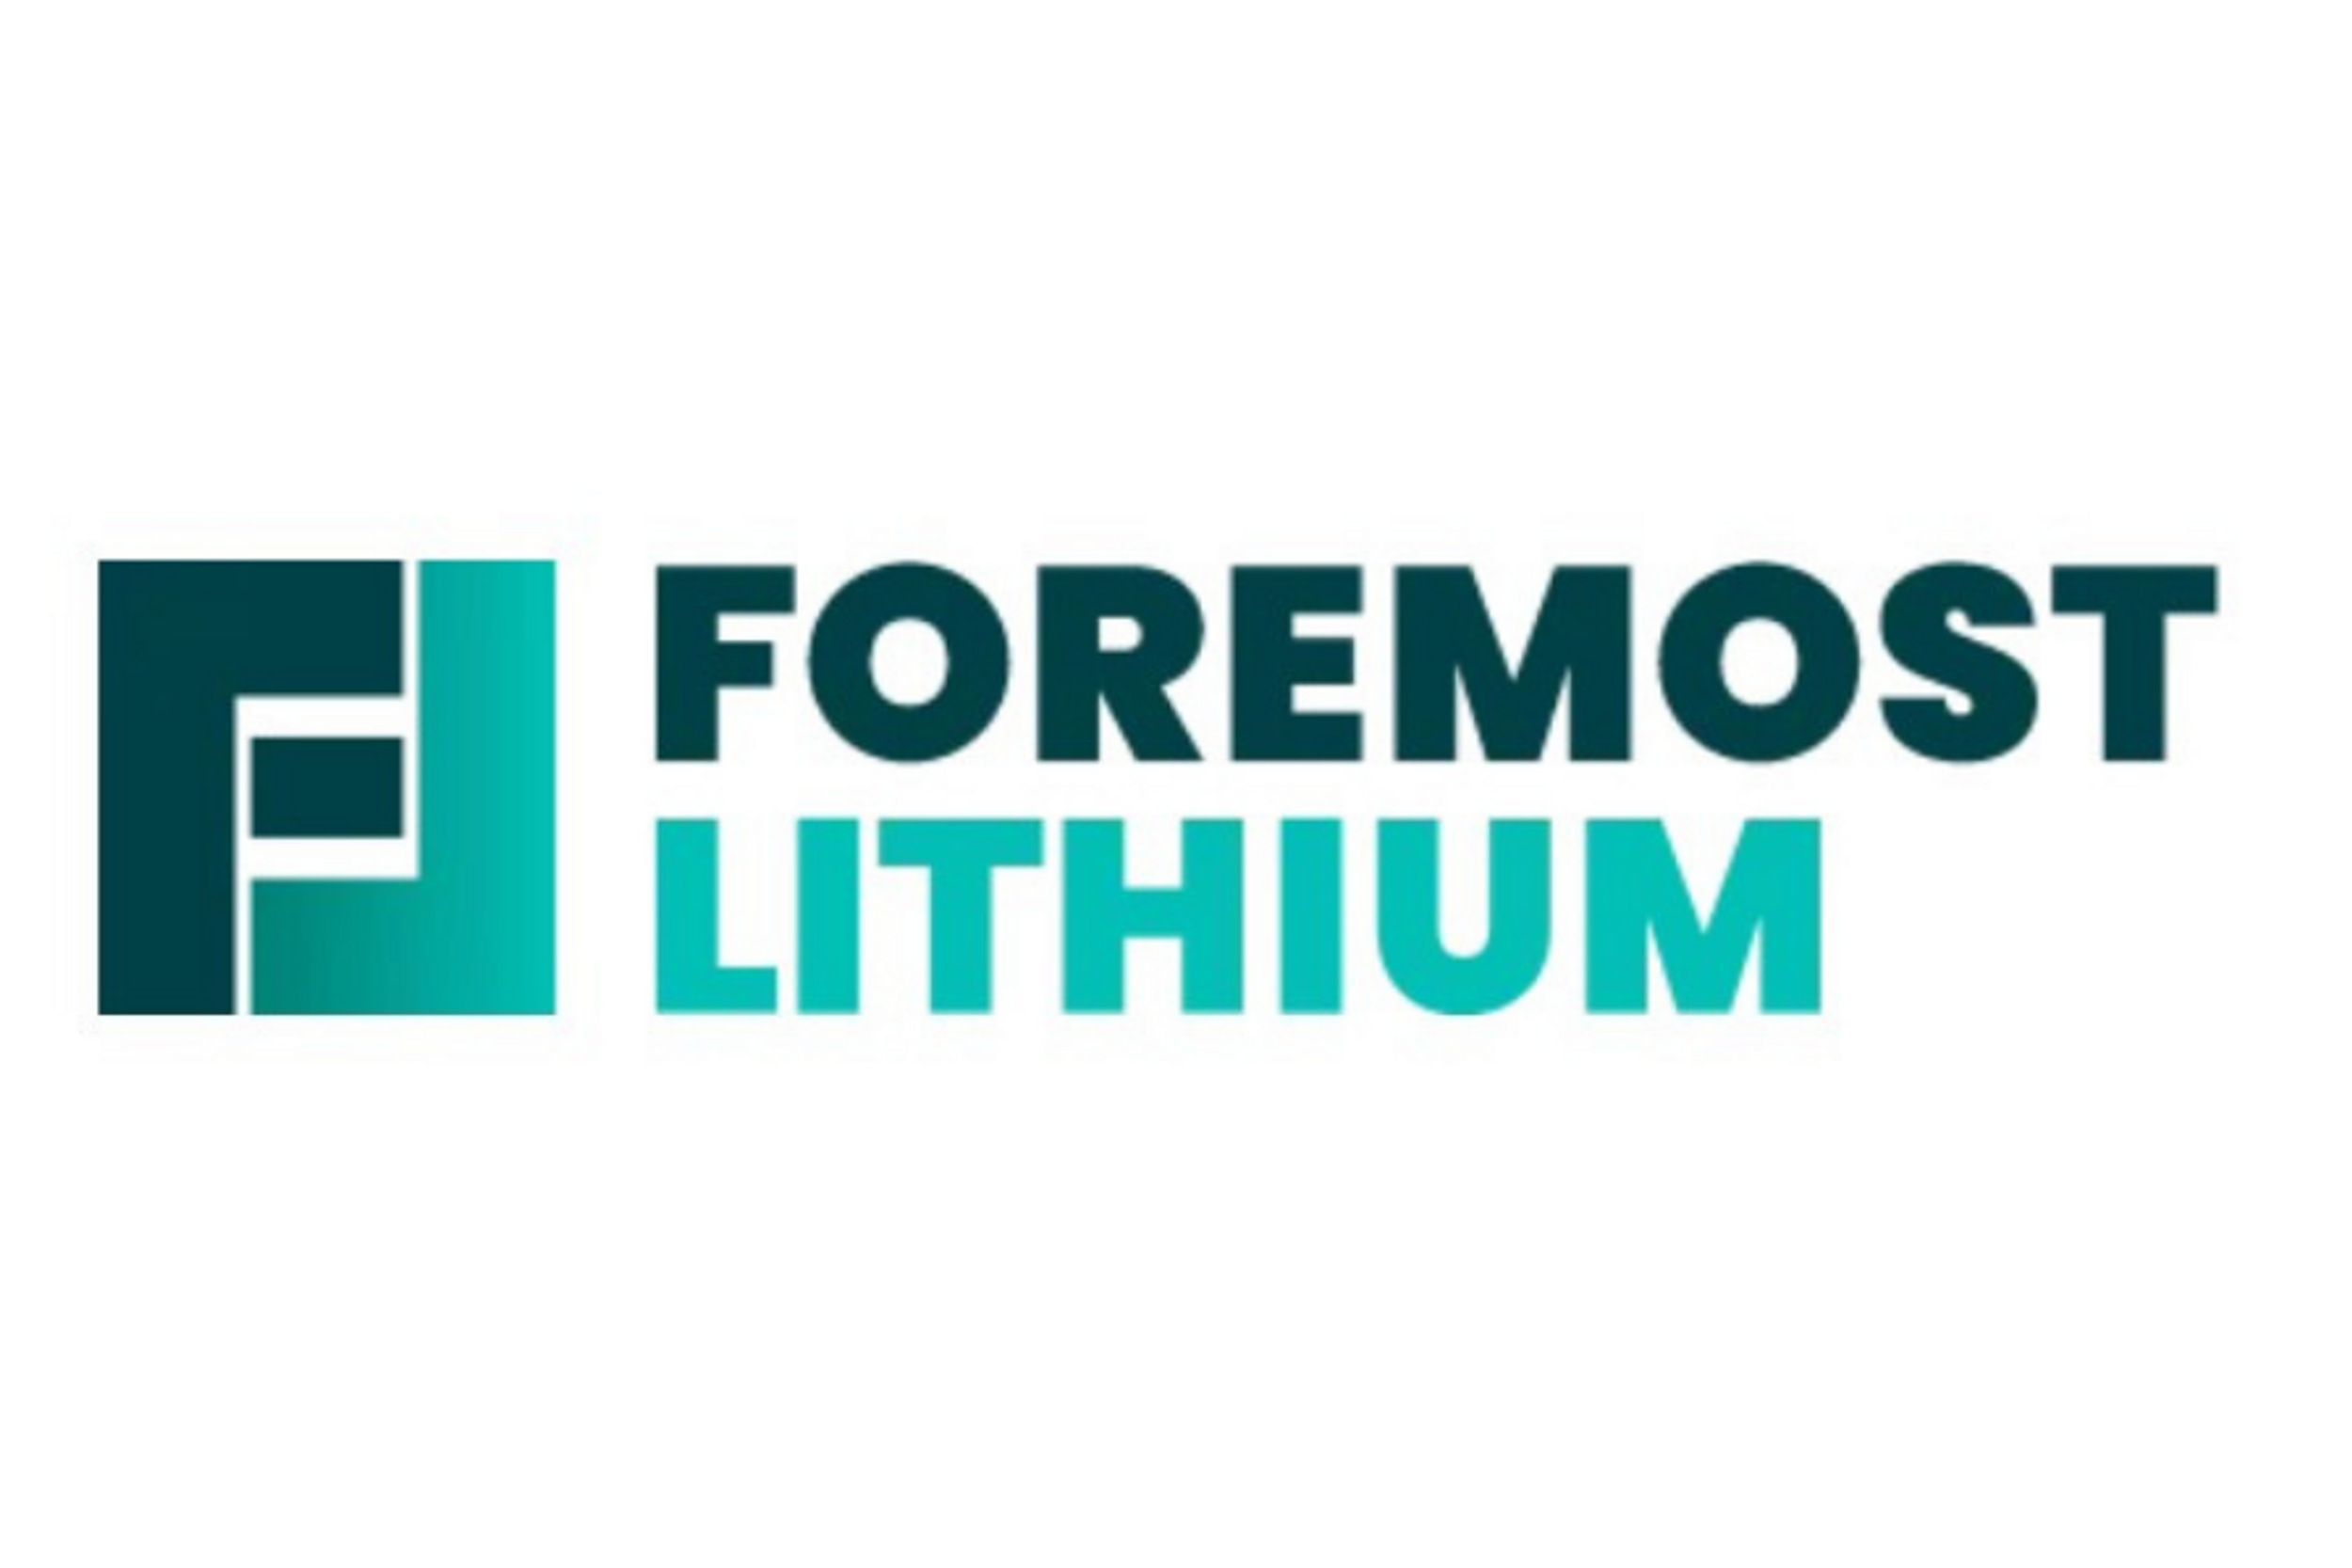 Foremost Lithium